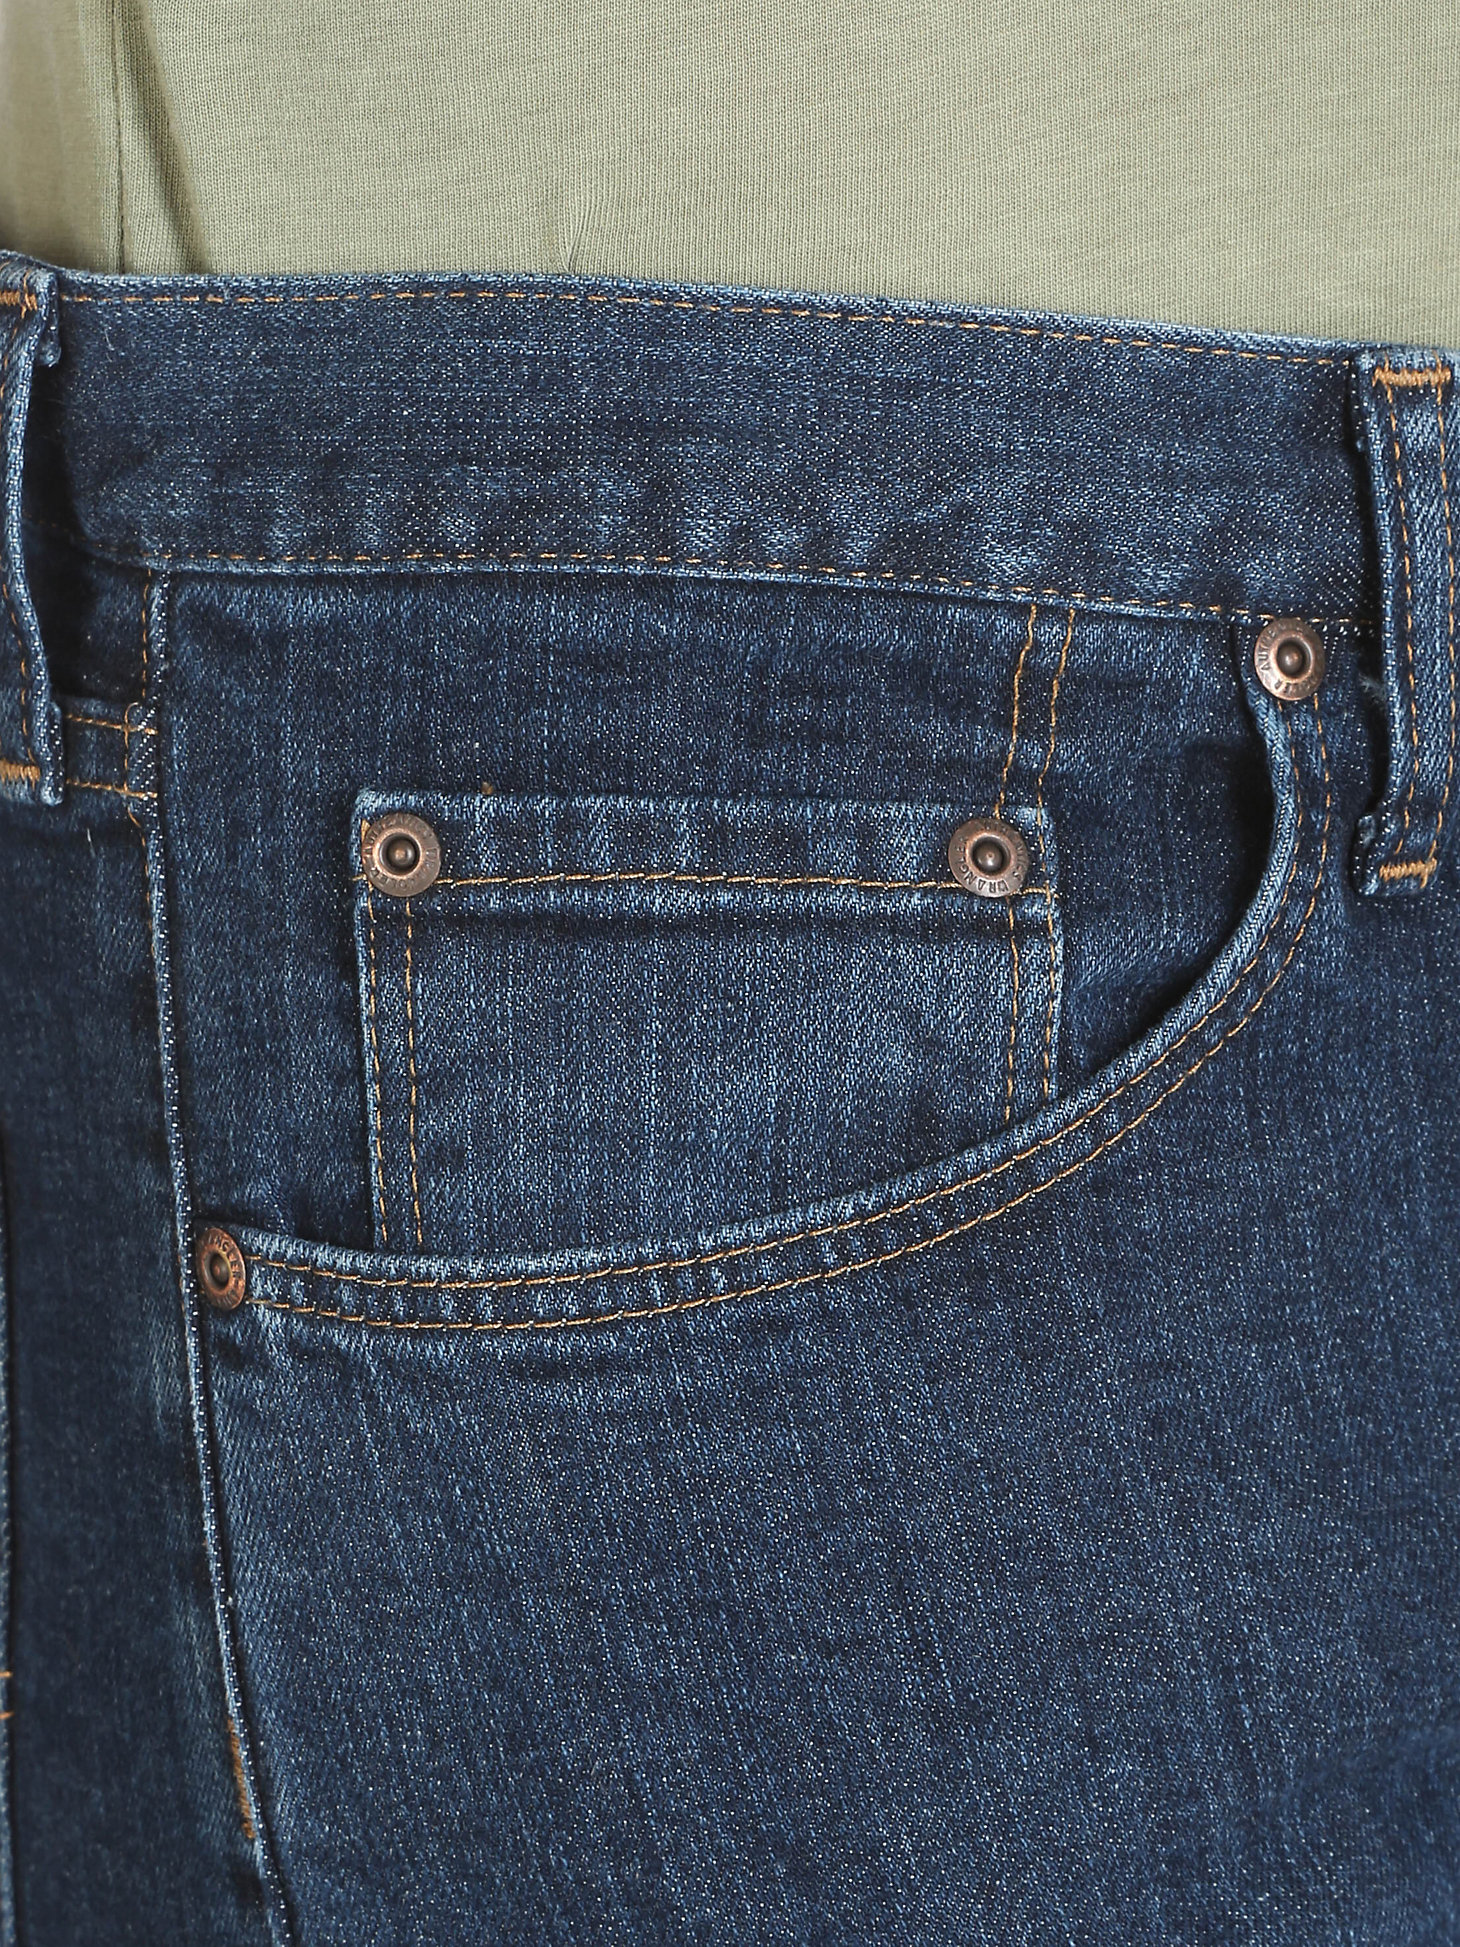 Men's Wrangler Authentics® Regular Fit Flex Jean in Indigo Dark alternative view 4